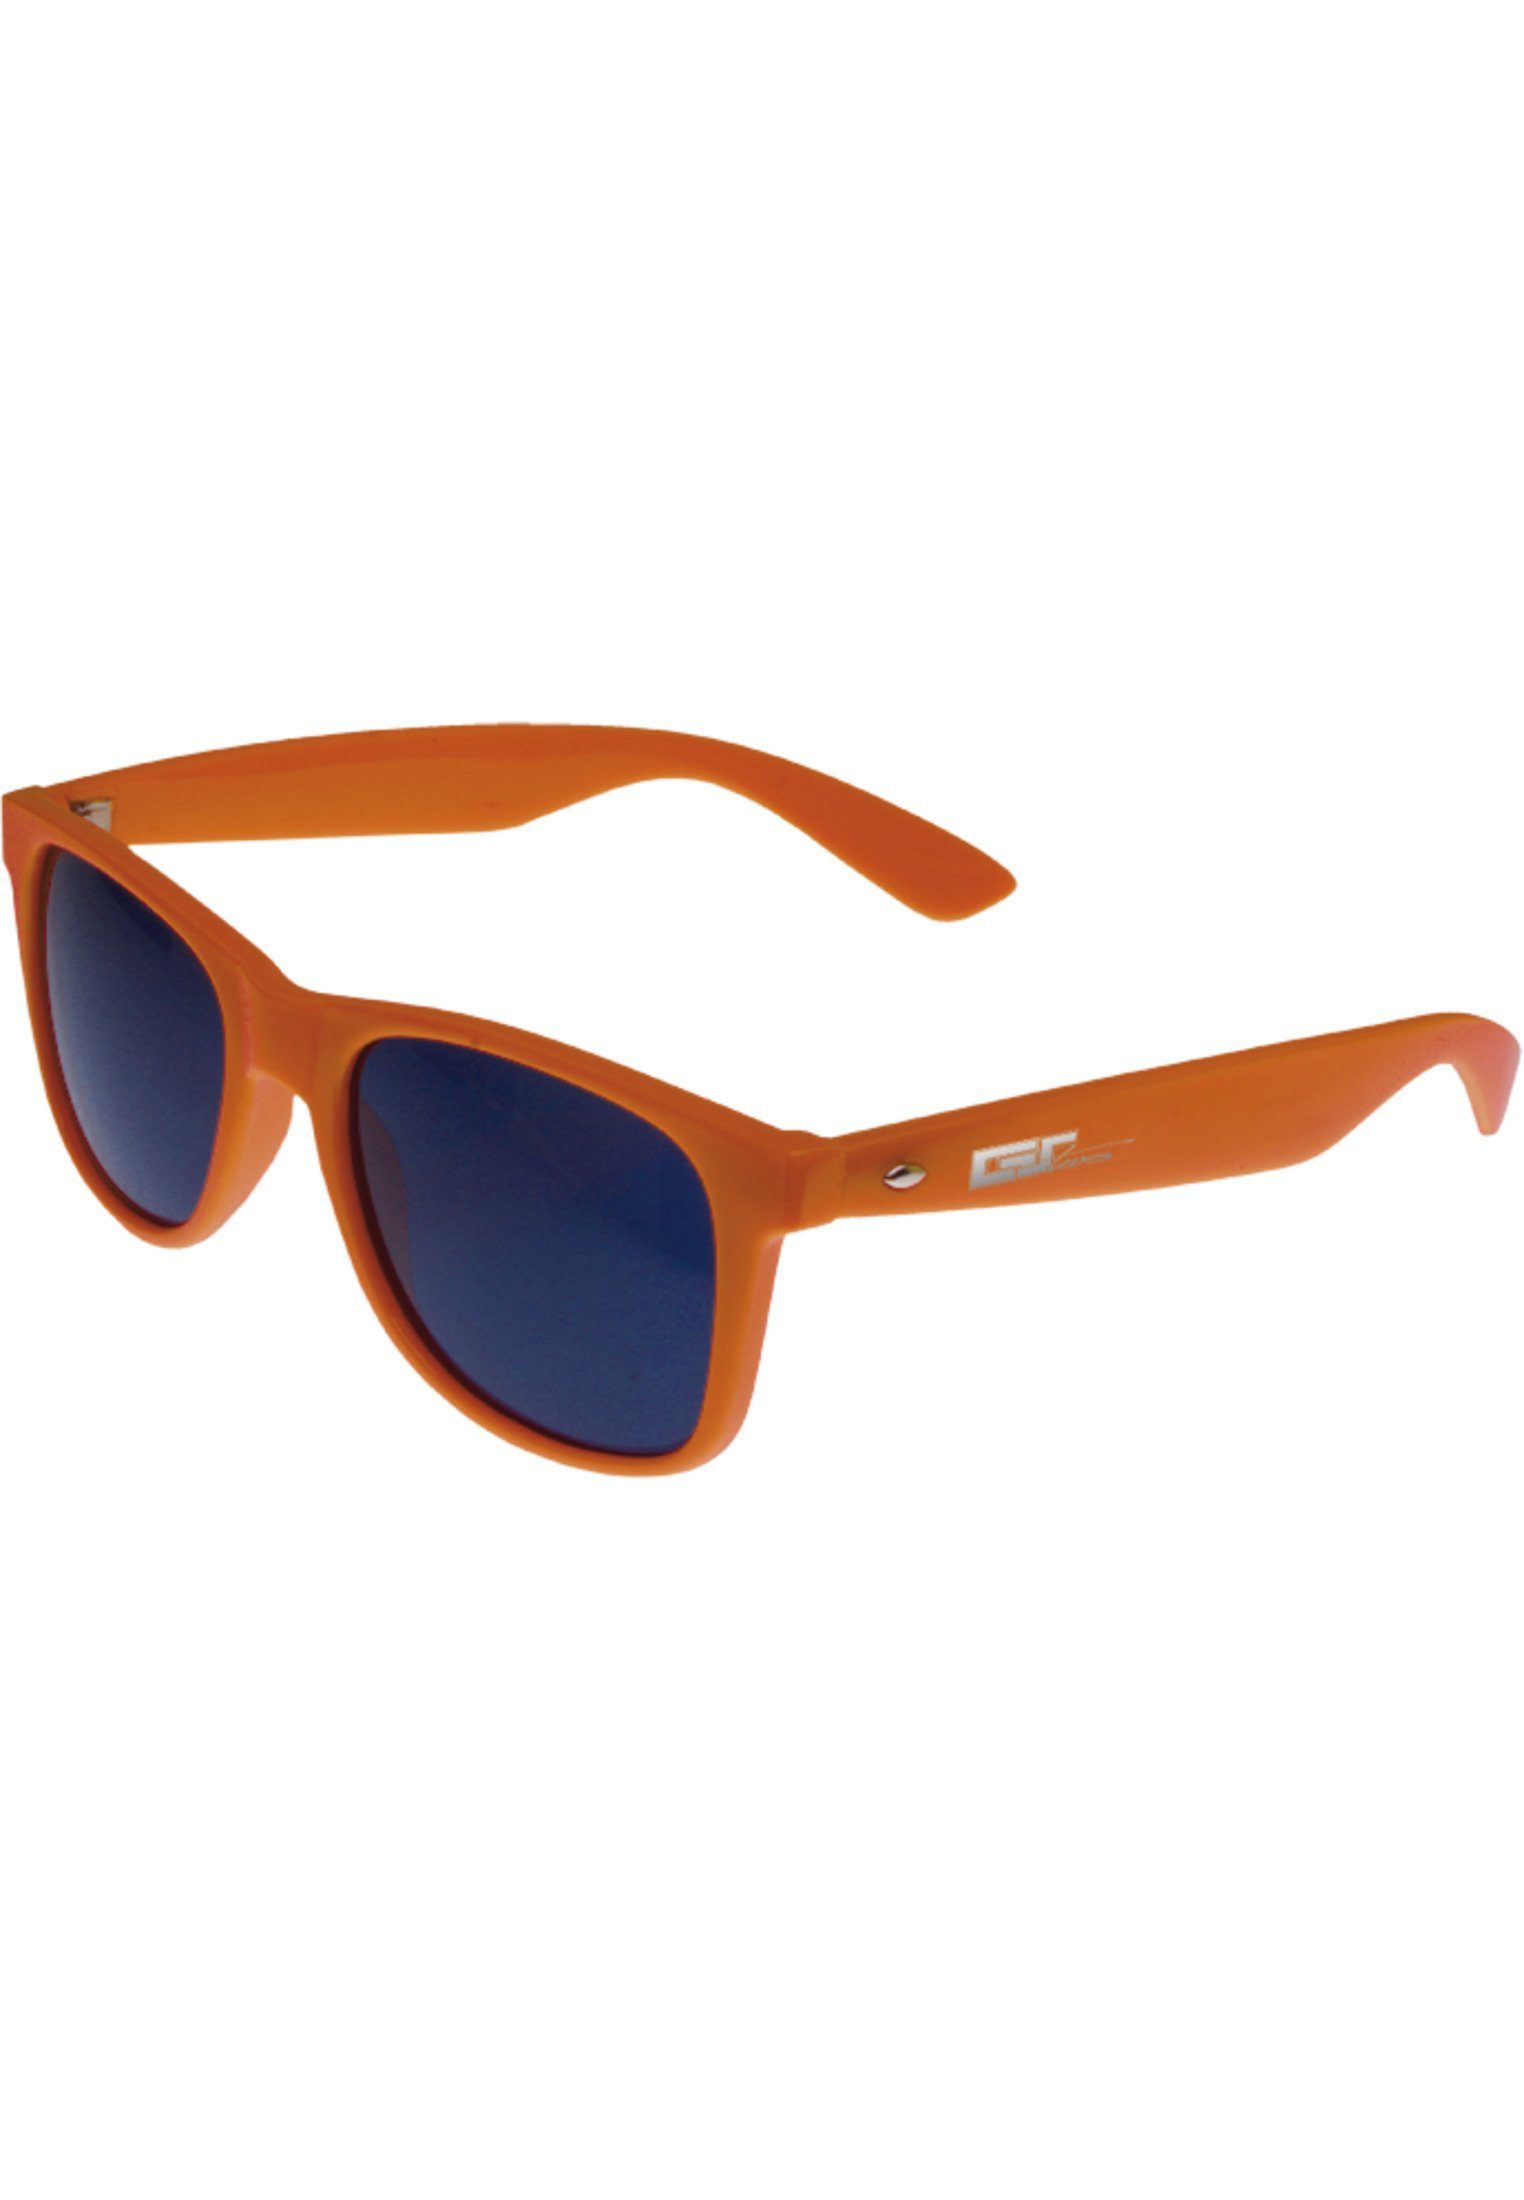 MSTRDS Sonnenbrille Shades GStwo Accessoires orange Groove